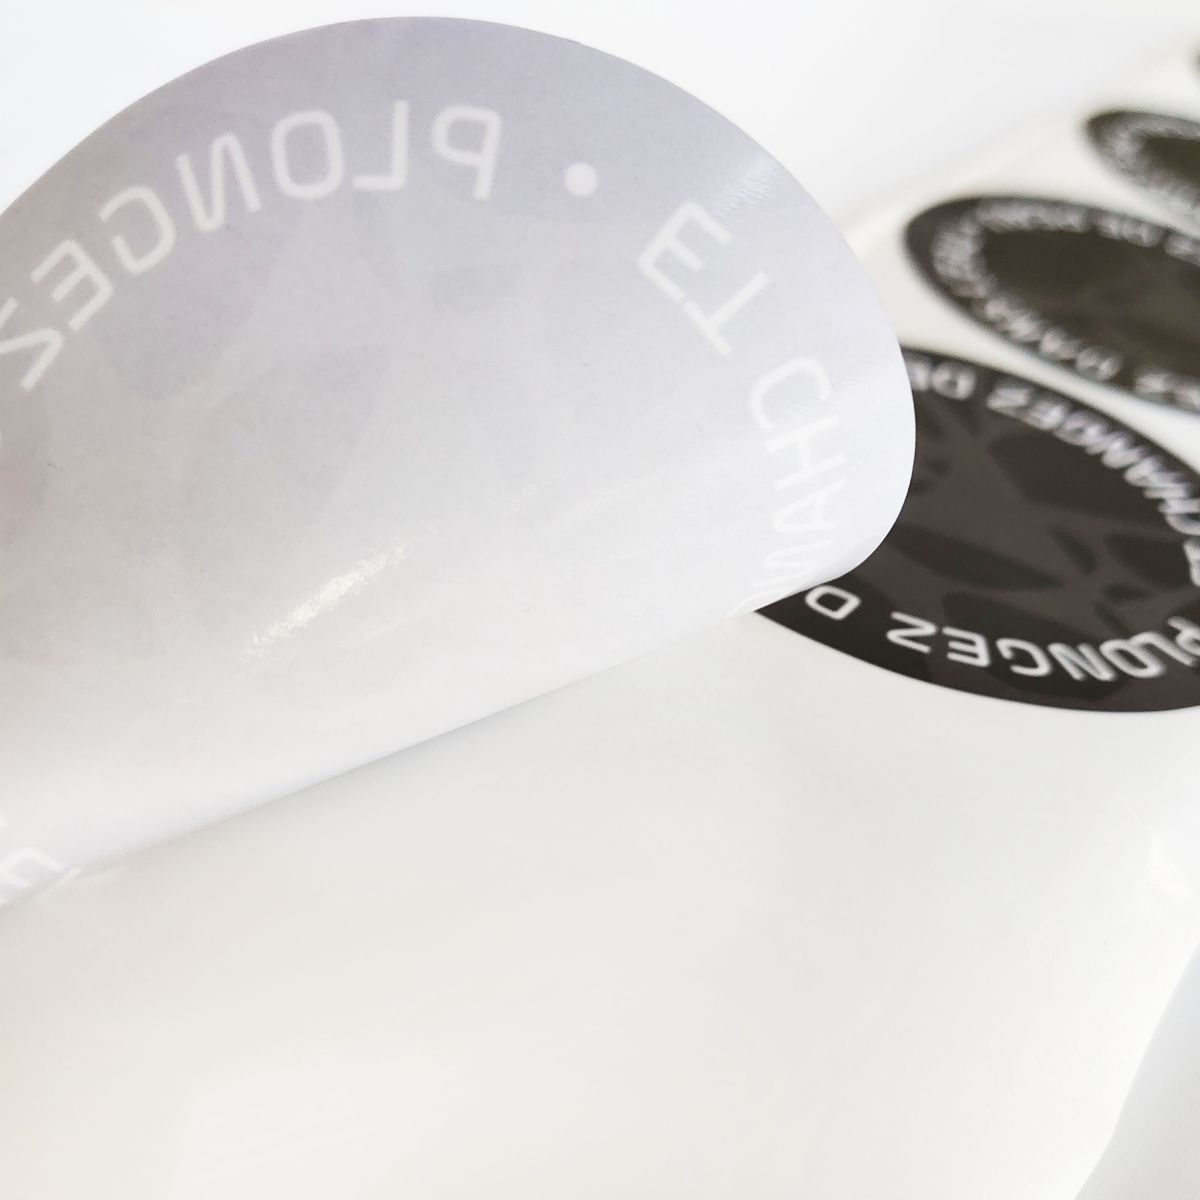 Custom Circle Stickers - Bulk Printing Stickers